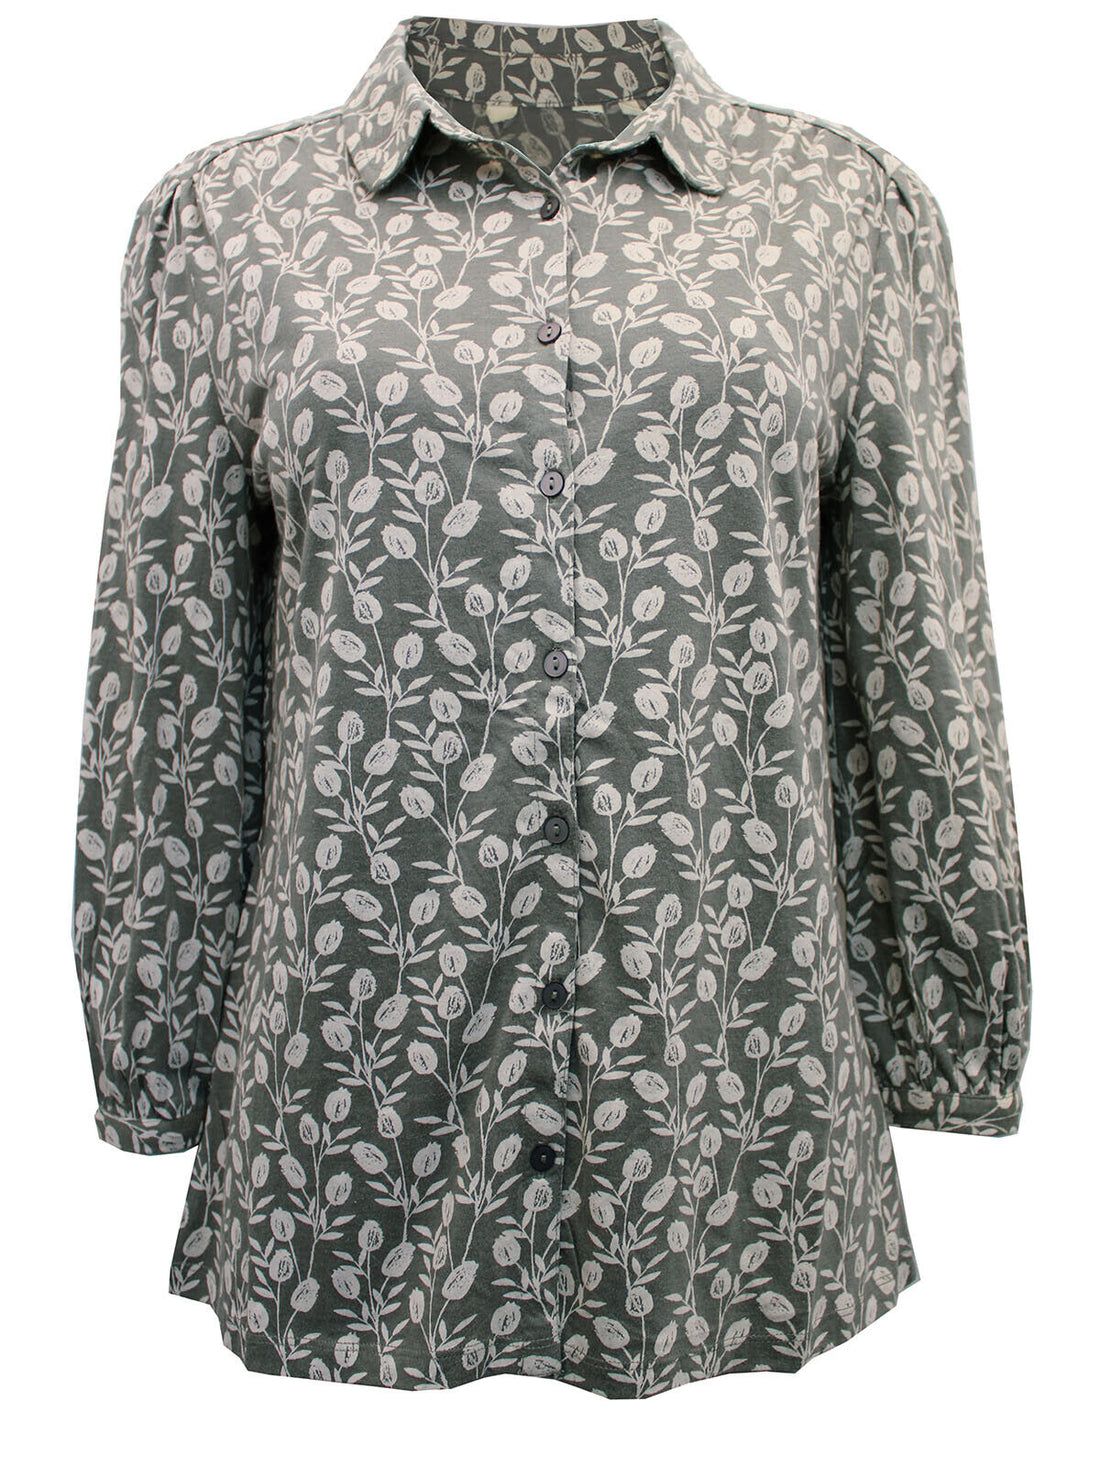 EX Seasalt Pale Green/Grey Poppy Heads Embrace Jersey Shirt Size 8-28 RRP £45.95